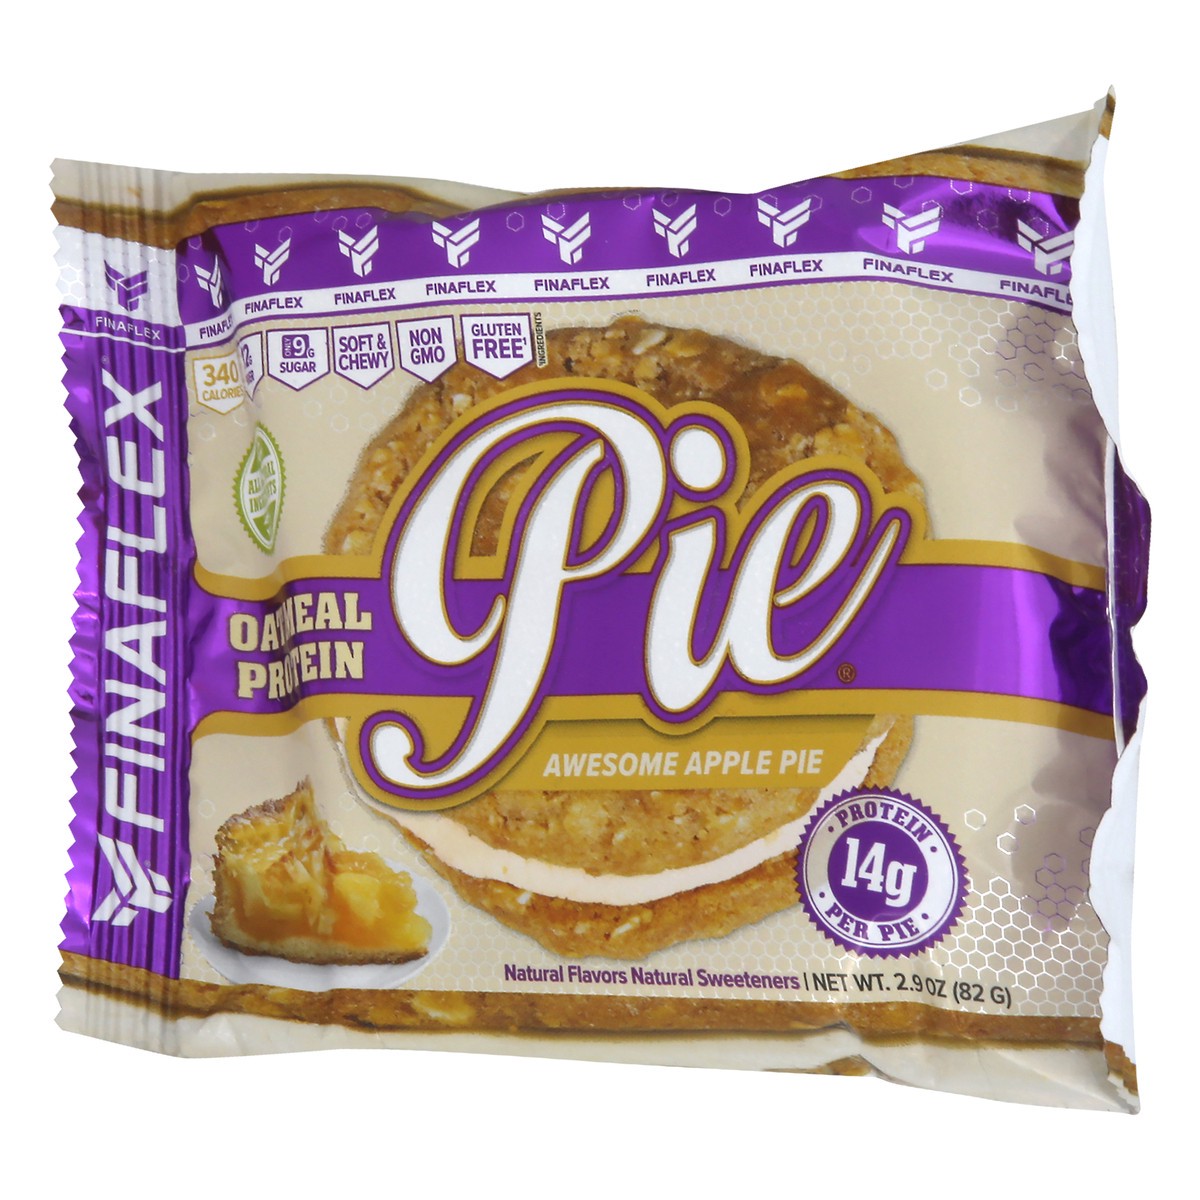 slide 1 of 12, FINAFLEX Protein Soft & Chewy Gluten Free Awesome Apple Pie Oatmeal Protein Pie 2.9 oz, 2.9 oz